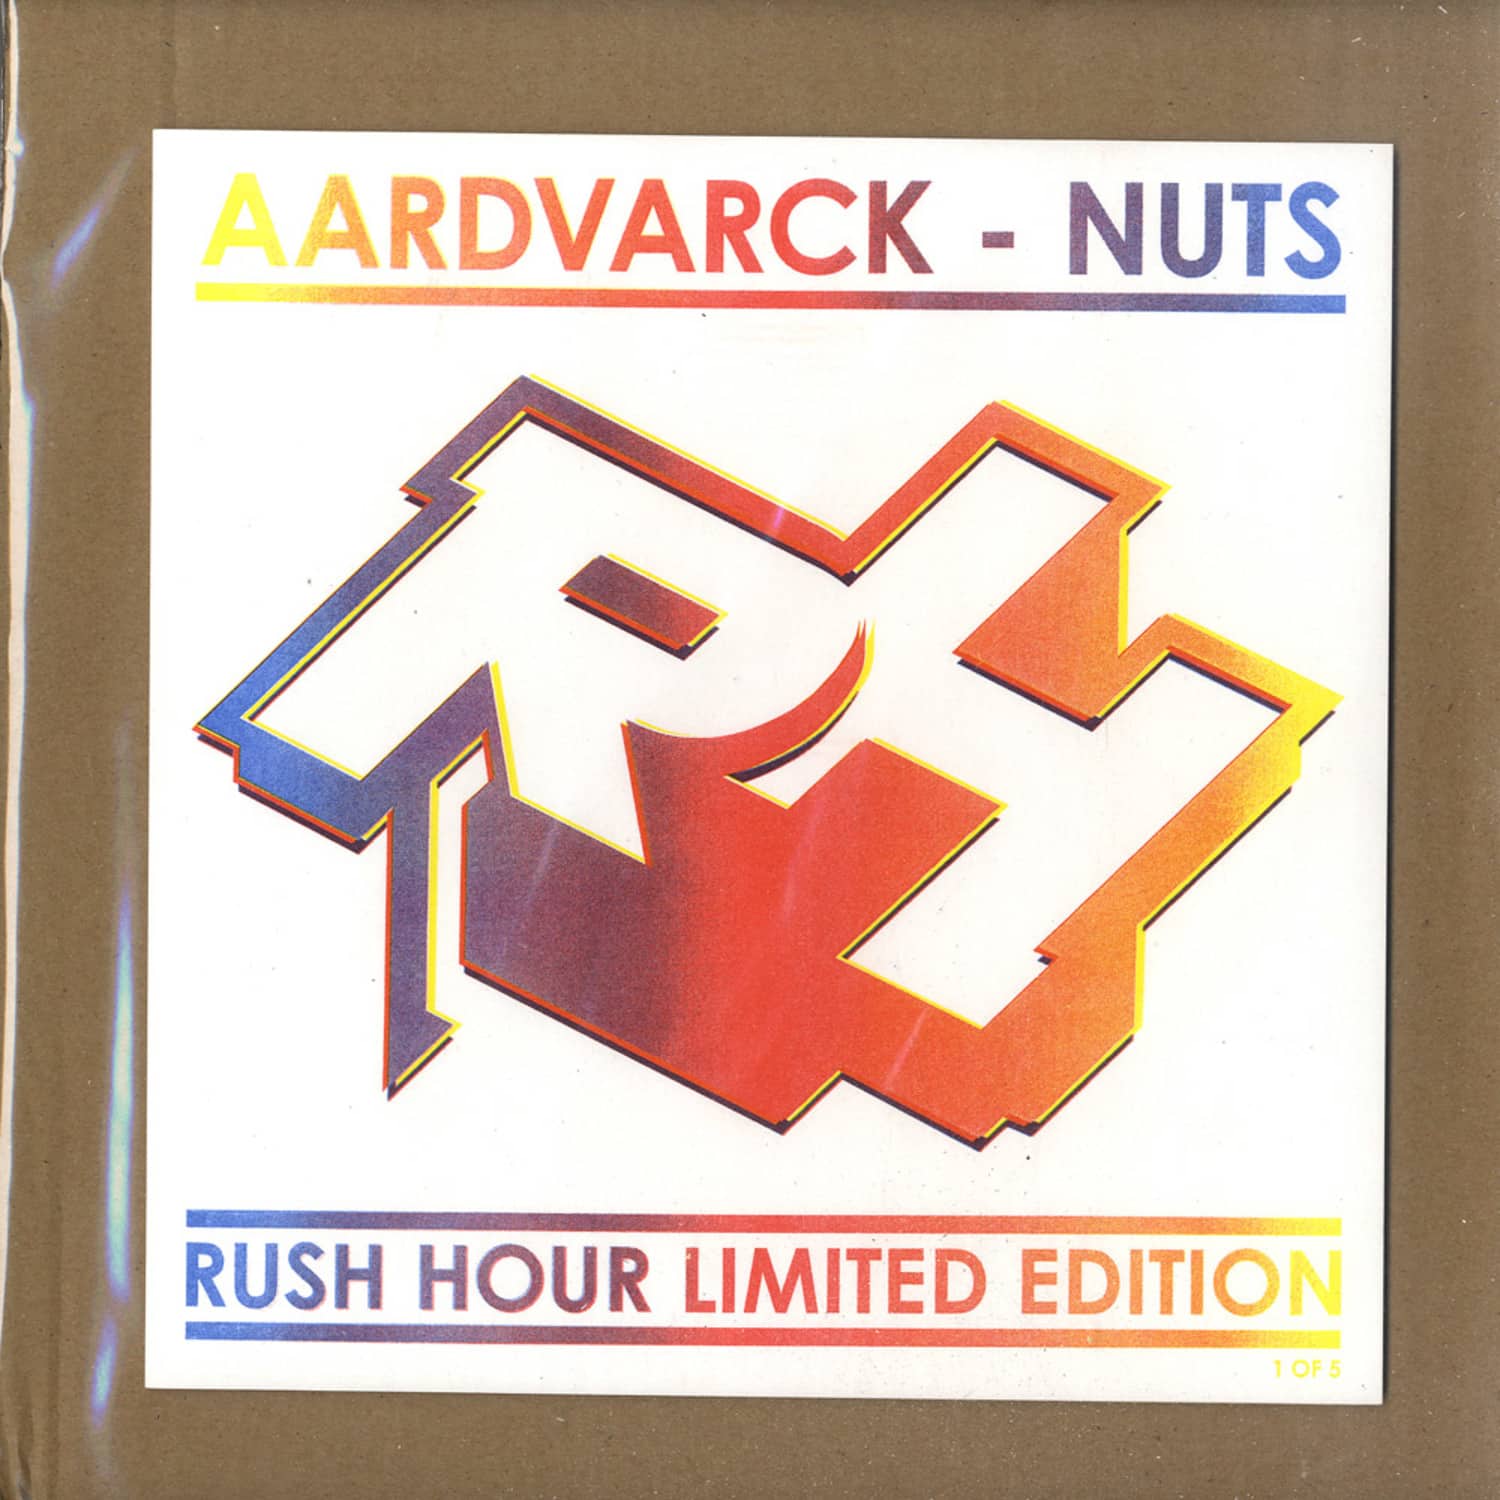 Aardvarck - NUTS